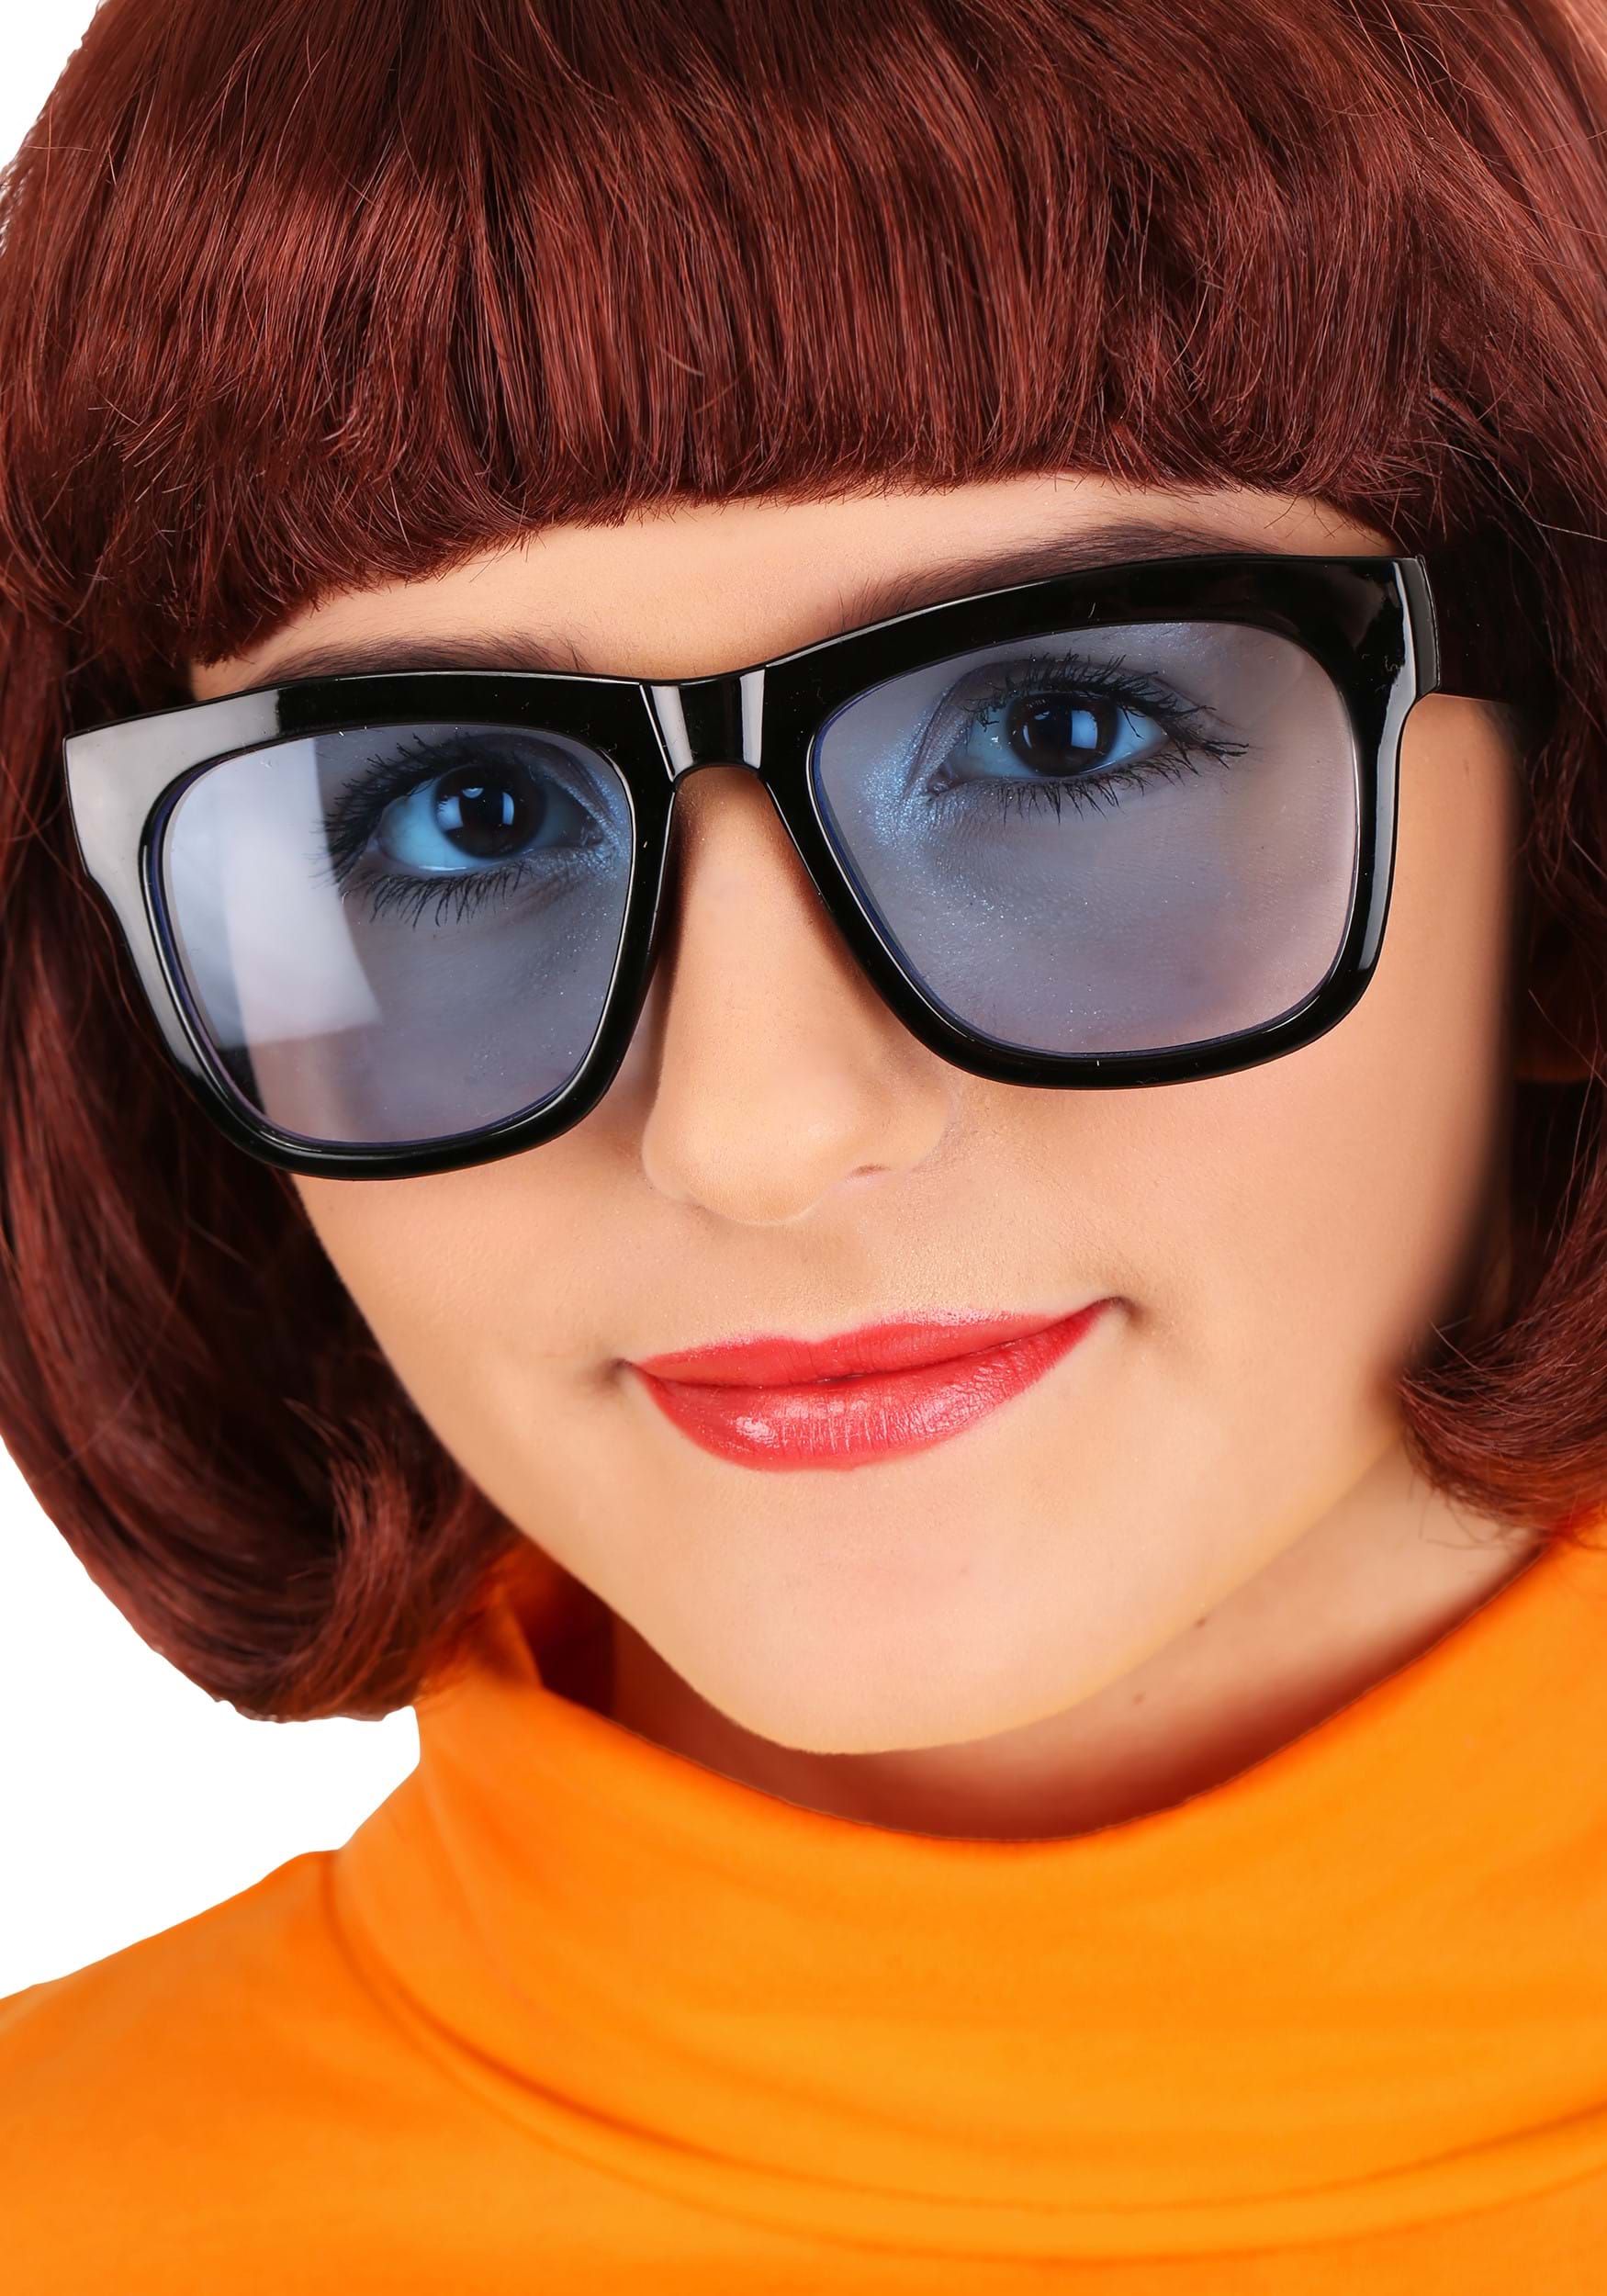 Velma Costume 